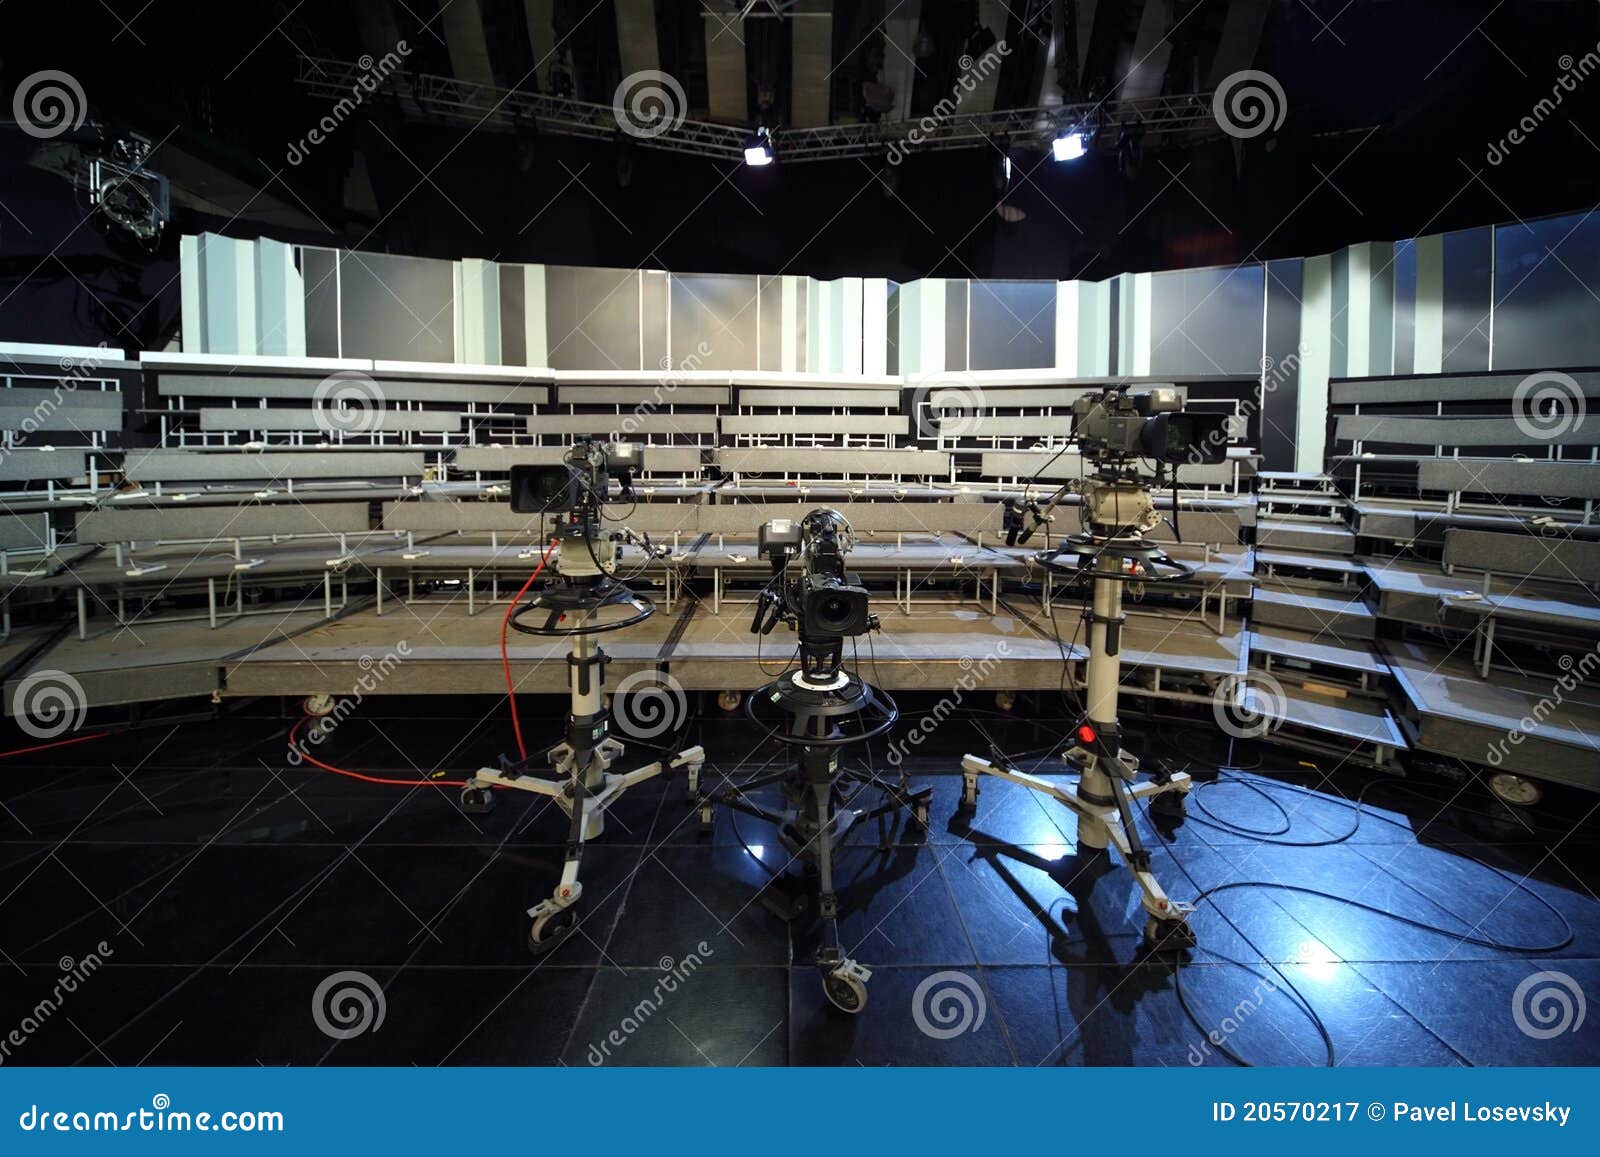 professional video cameras in television studio